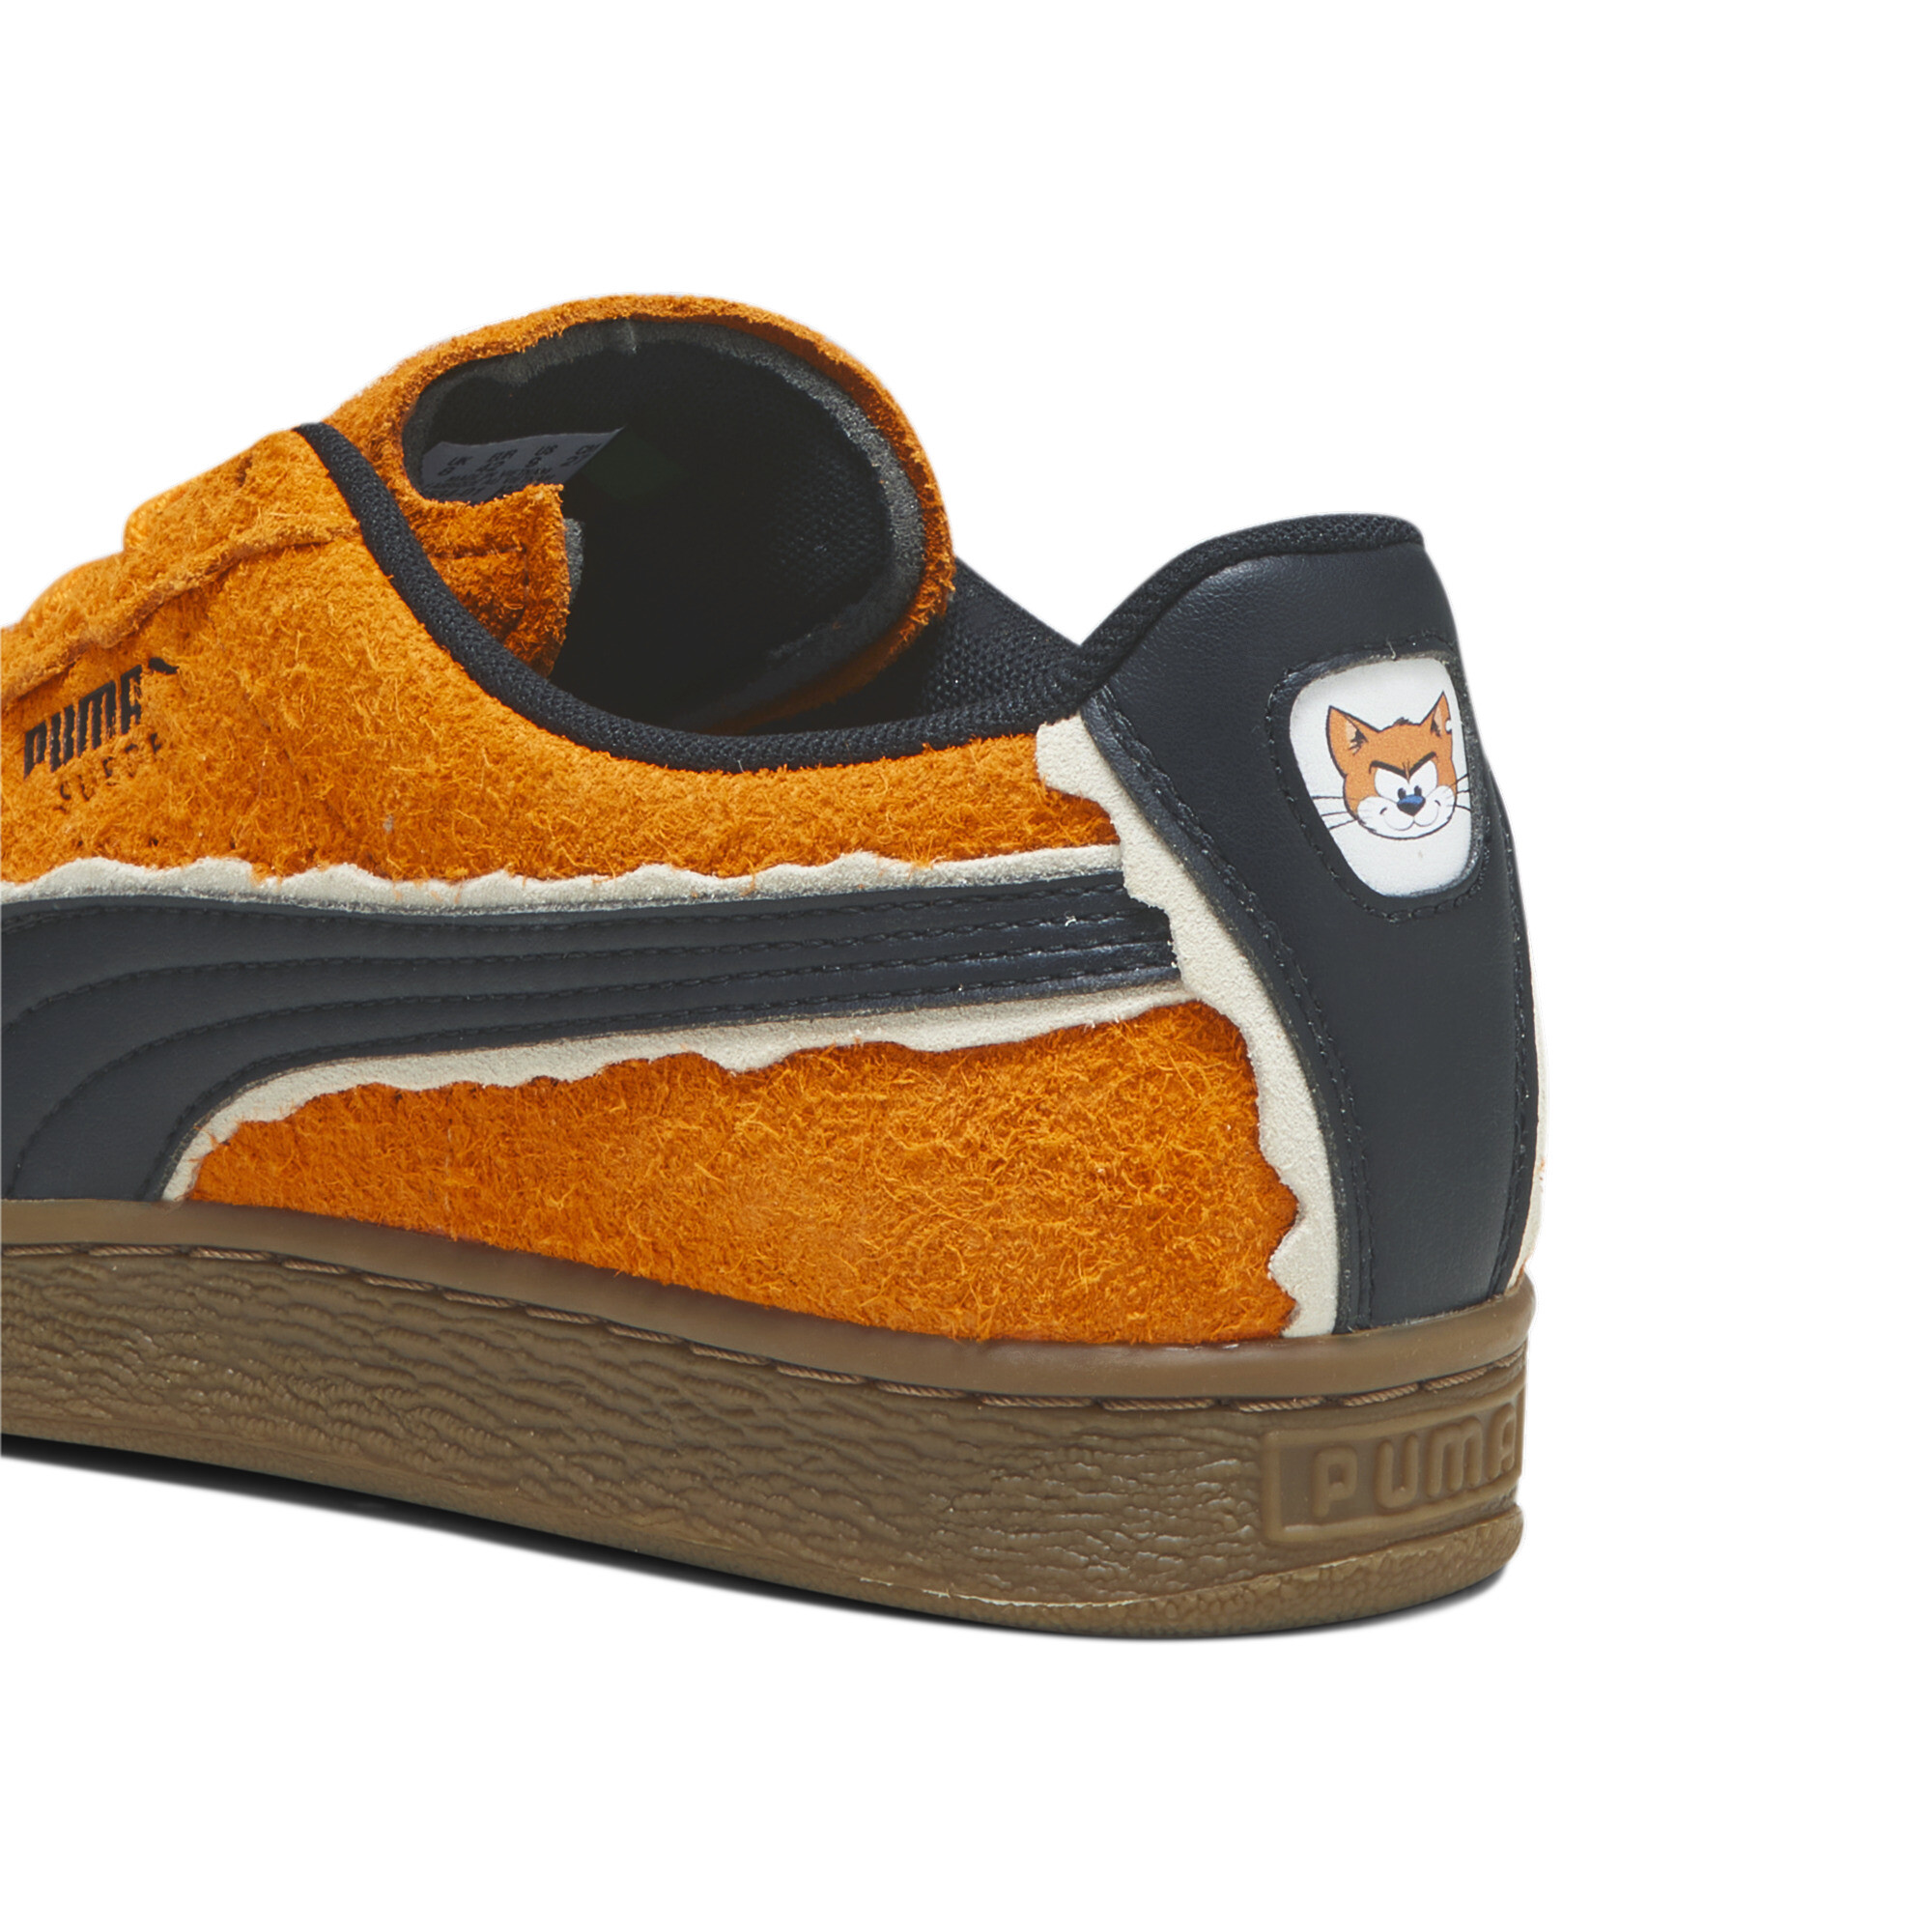 Men's PUMA X THE SMURFS Suede Sneakers In Orange, Size EU 42